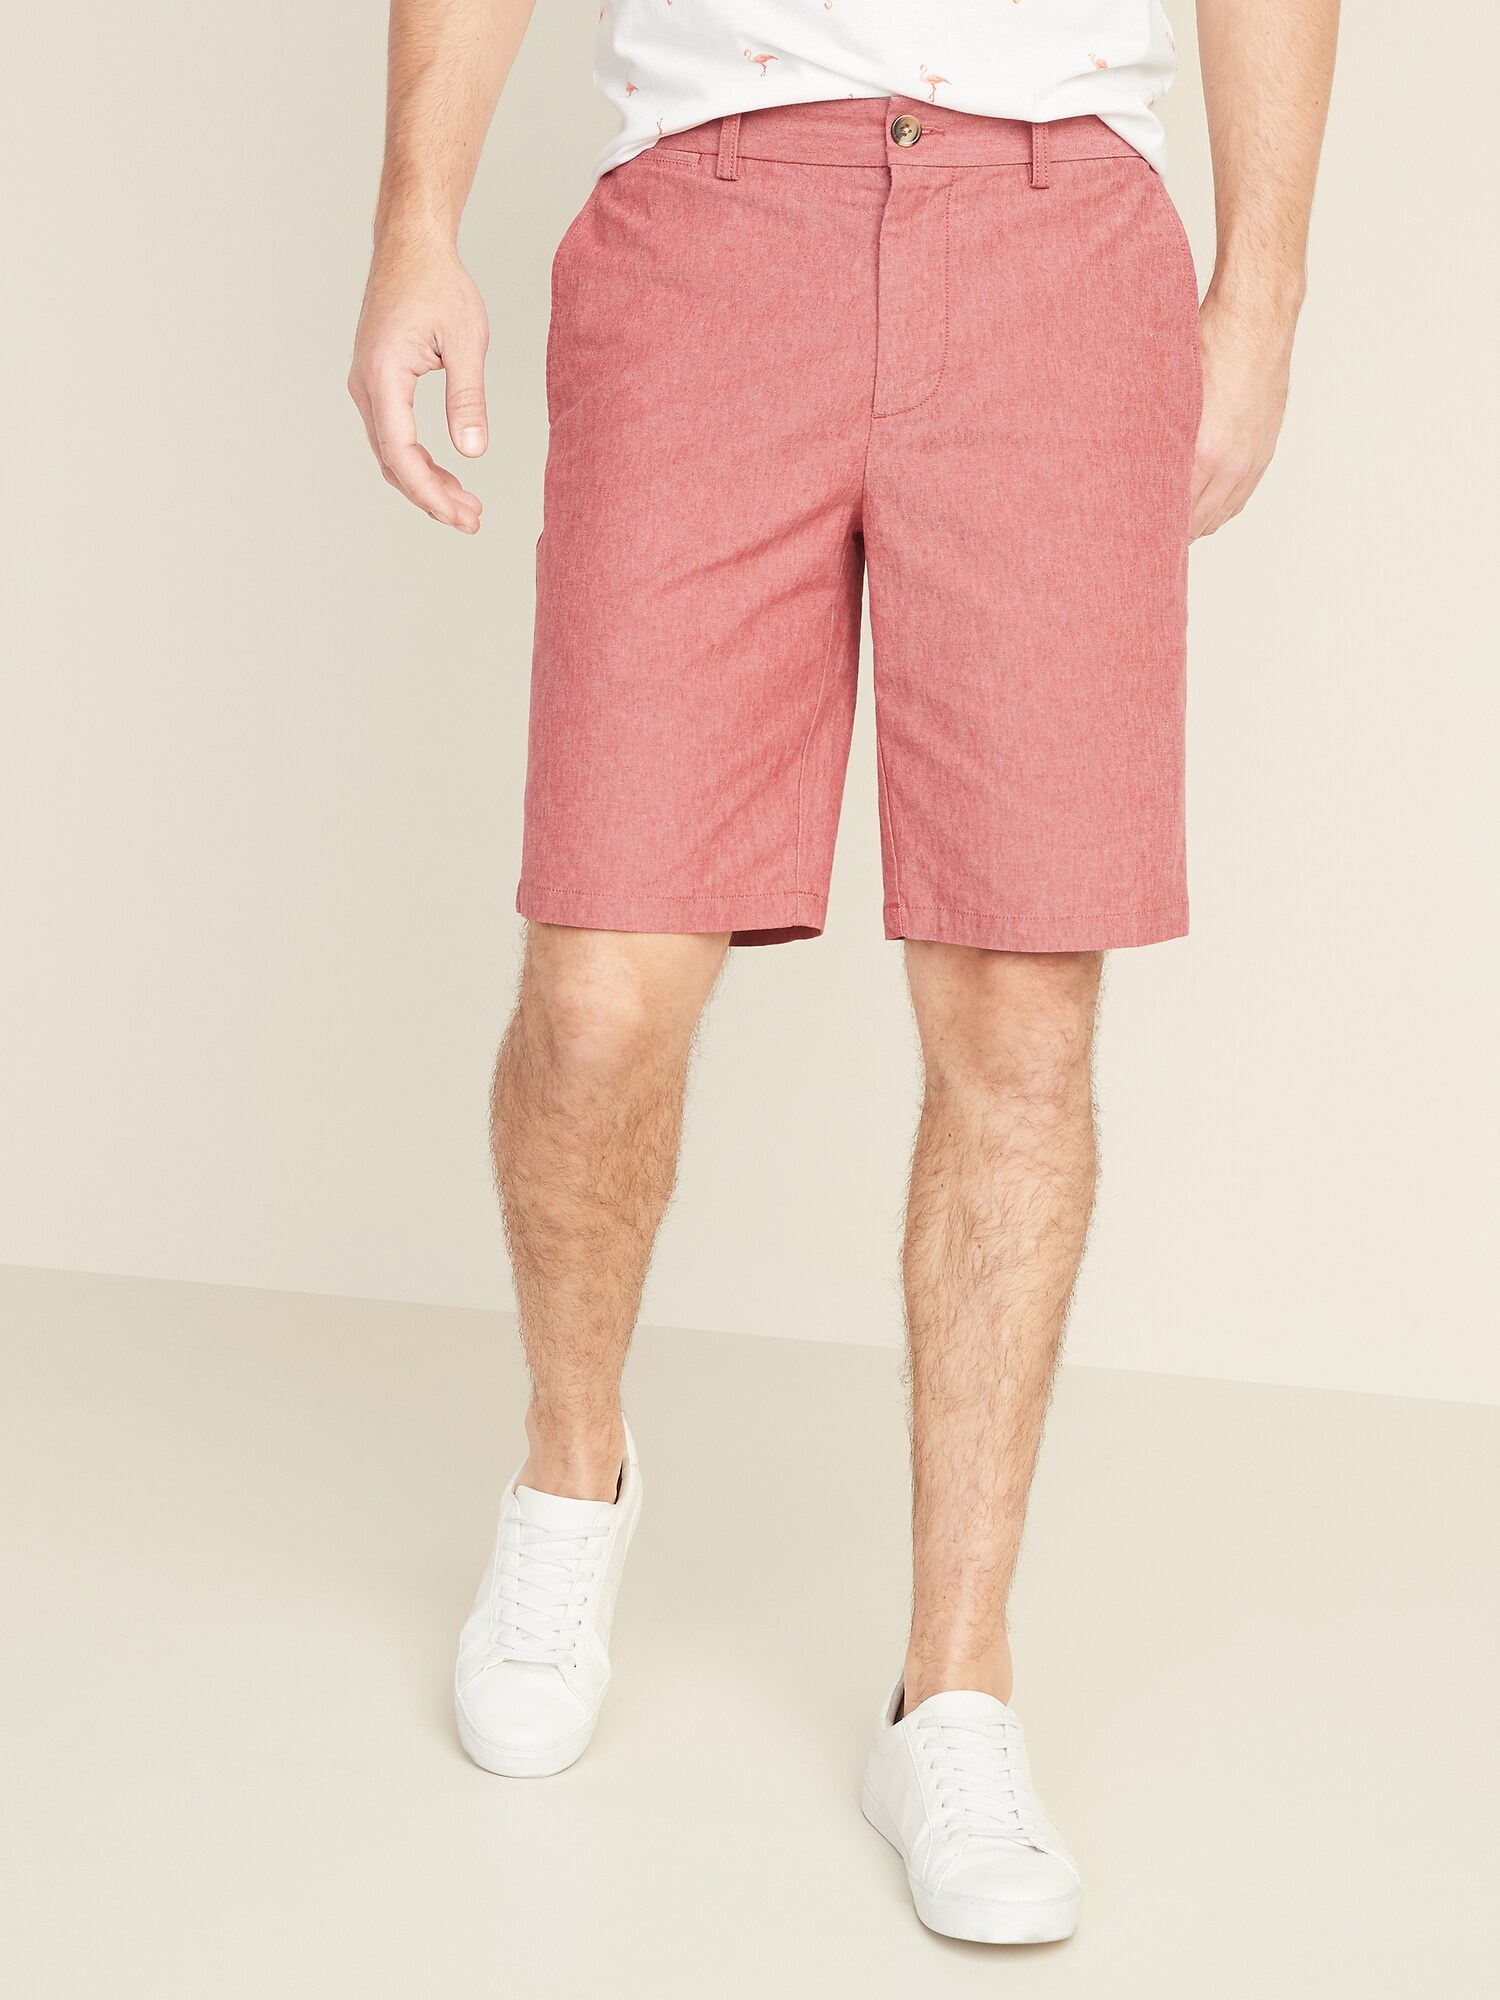 *Hot Deal* Slim Ultimate Shorts for Men -- 10-inch inseam